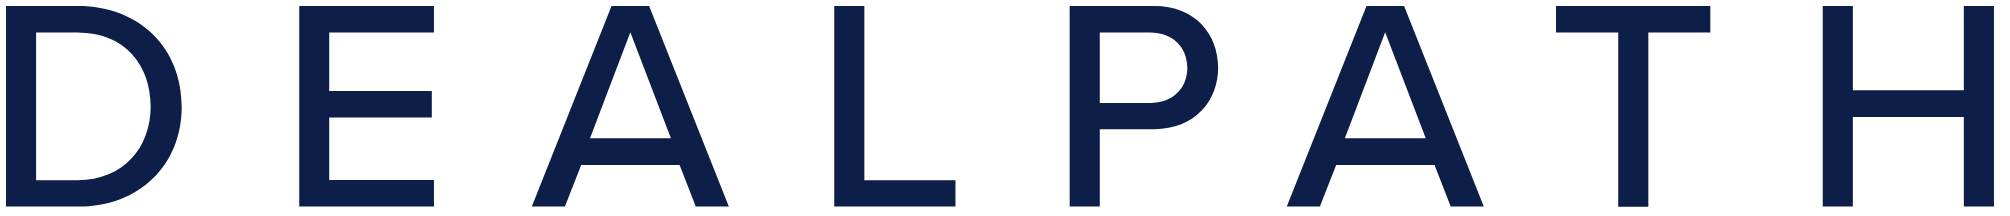 dealpath-logo-DP-BLUE-3